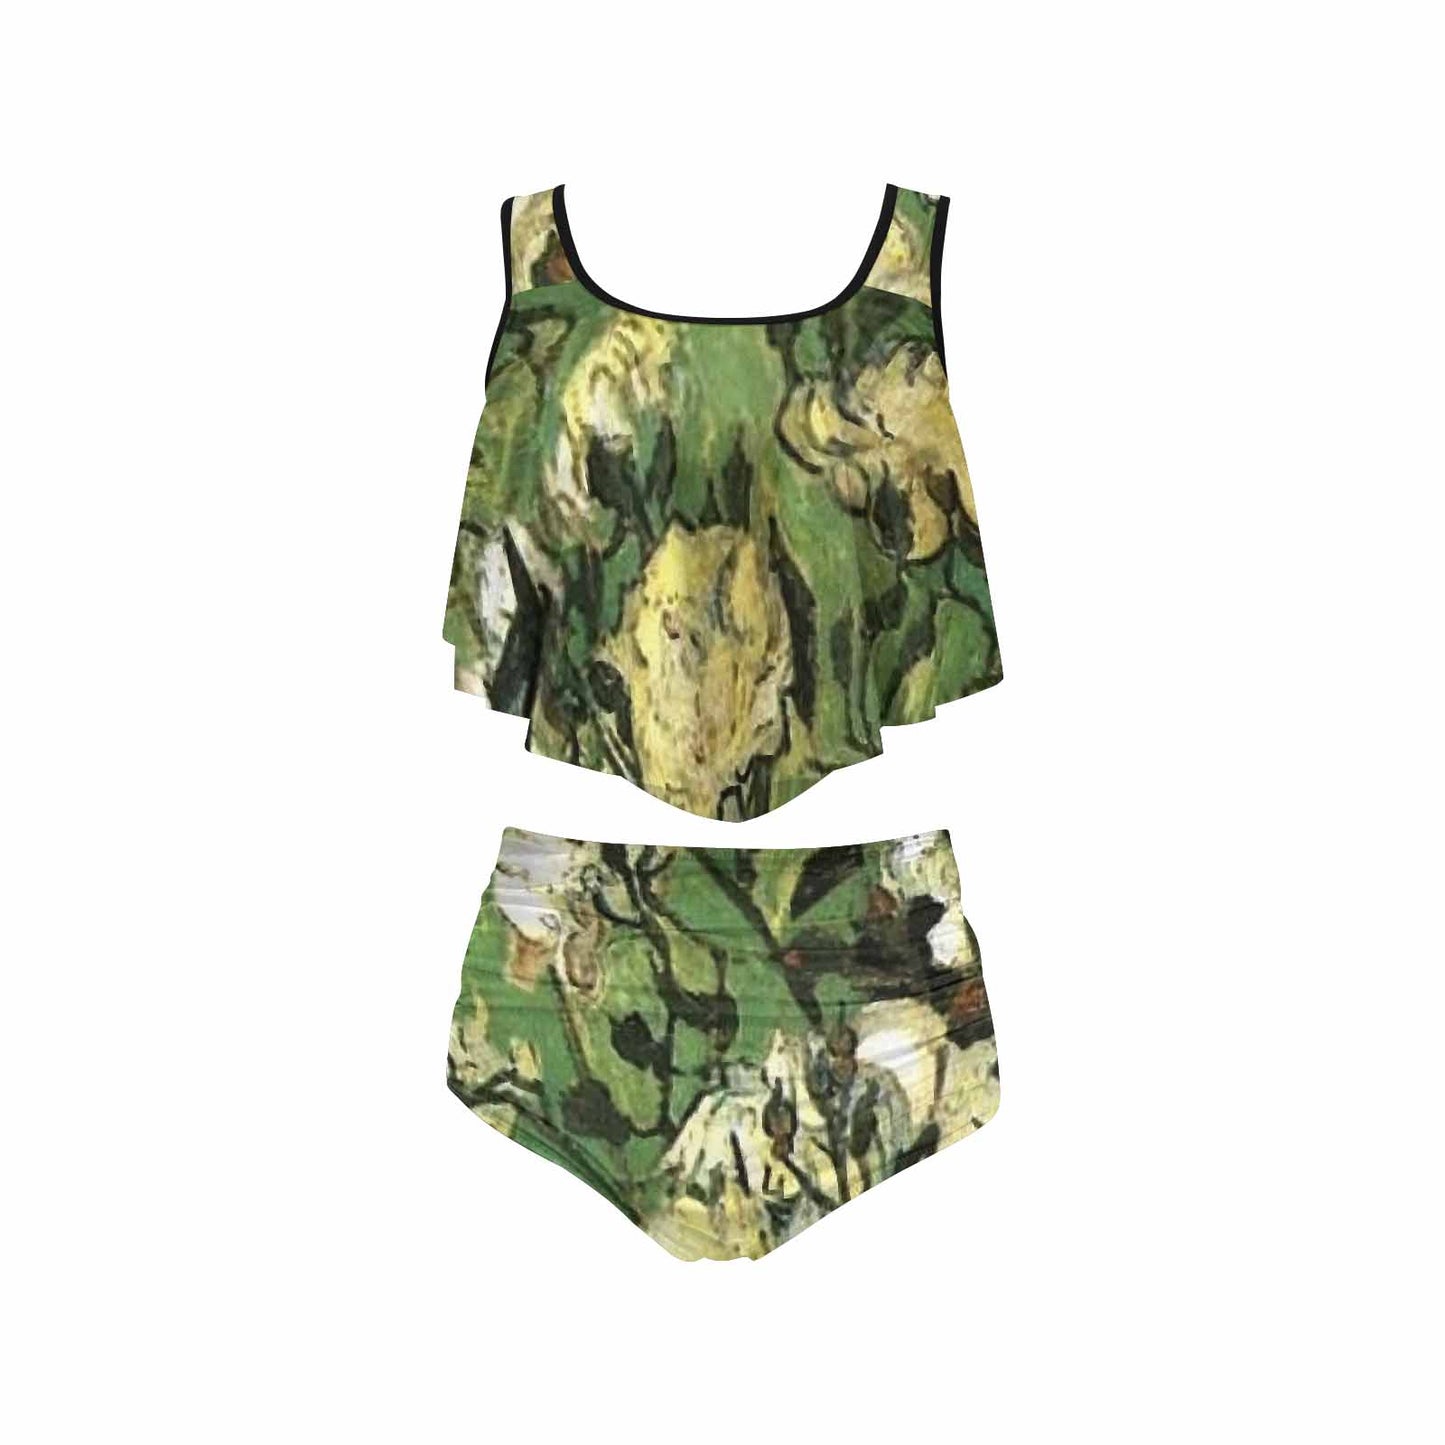 Vintage floral high waisted flounce top bikini, swim wear, Design 55